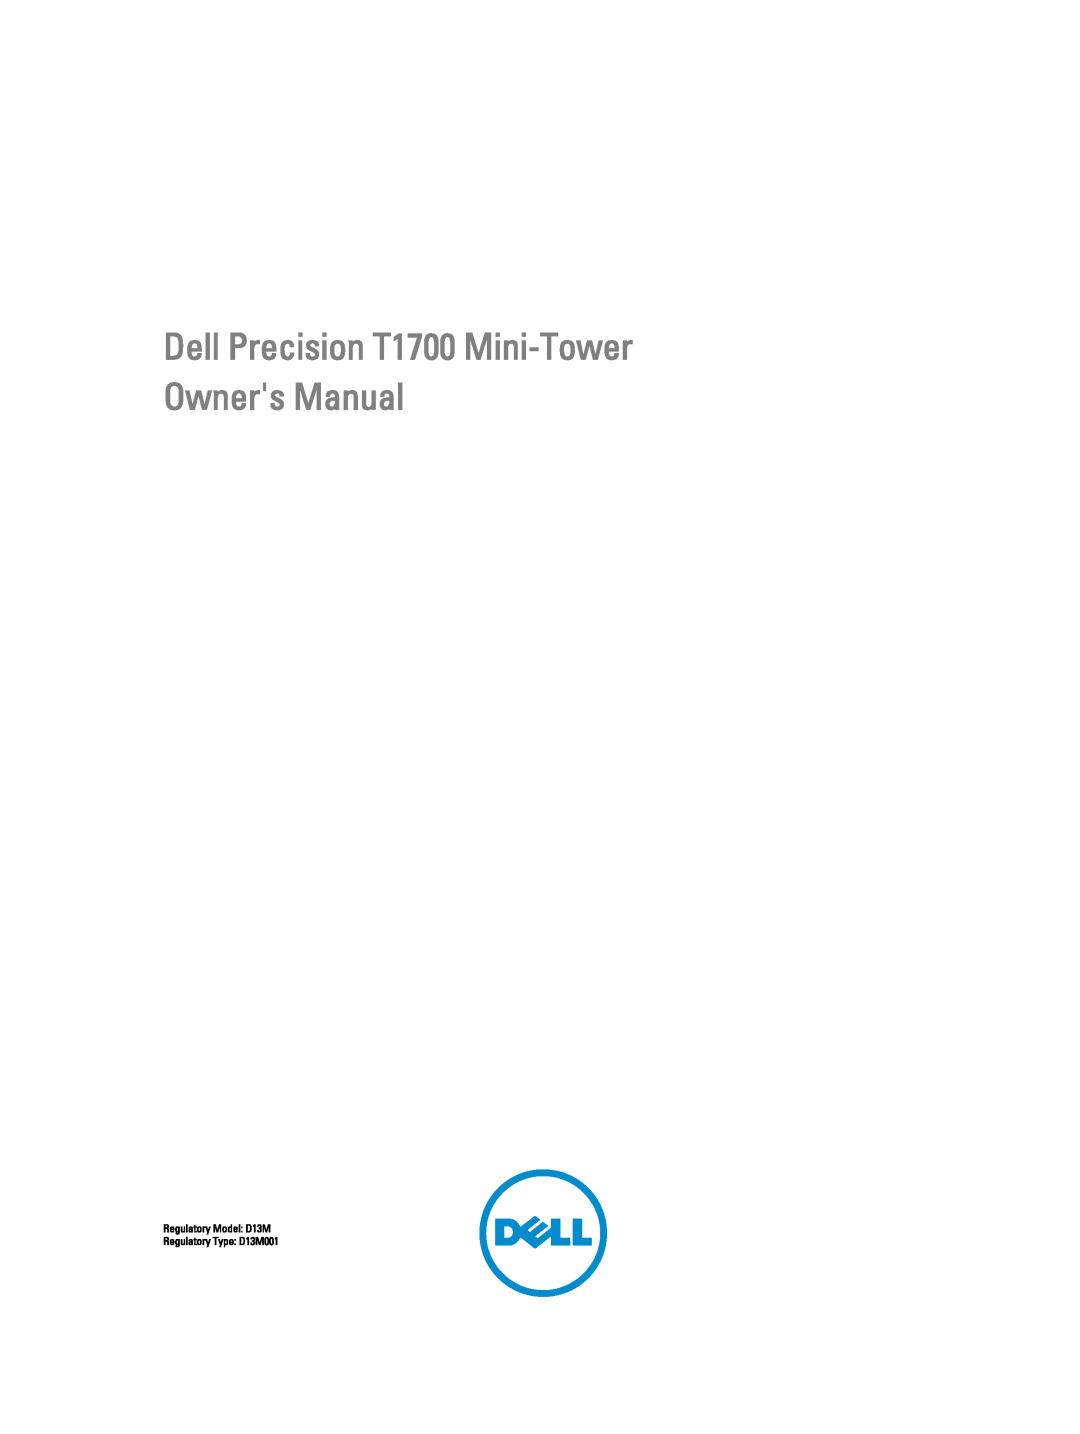 Dell owner manual Dell Precision T1700 Mini-TowerOwners Manual, Regulatory Model D13M Regulatory Type D13M001 